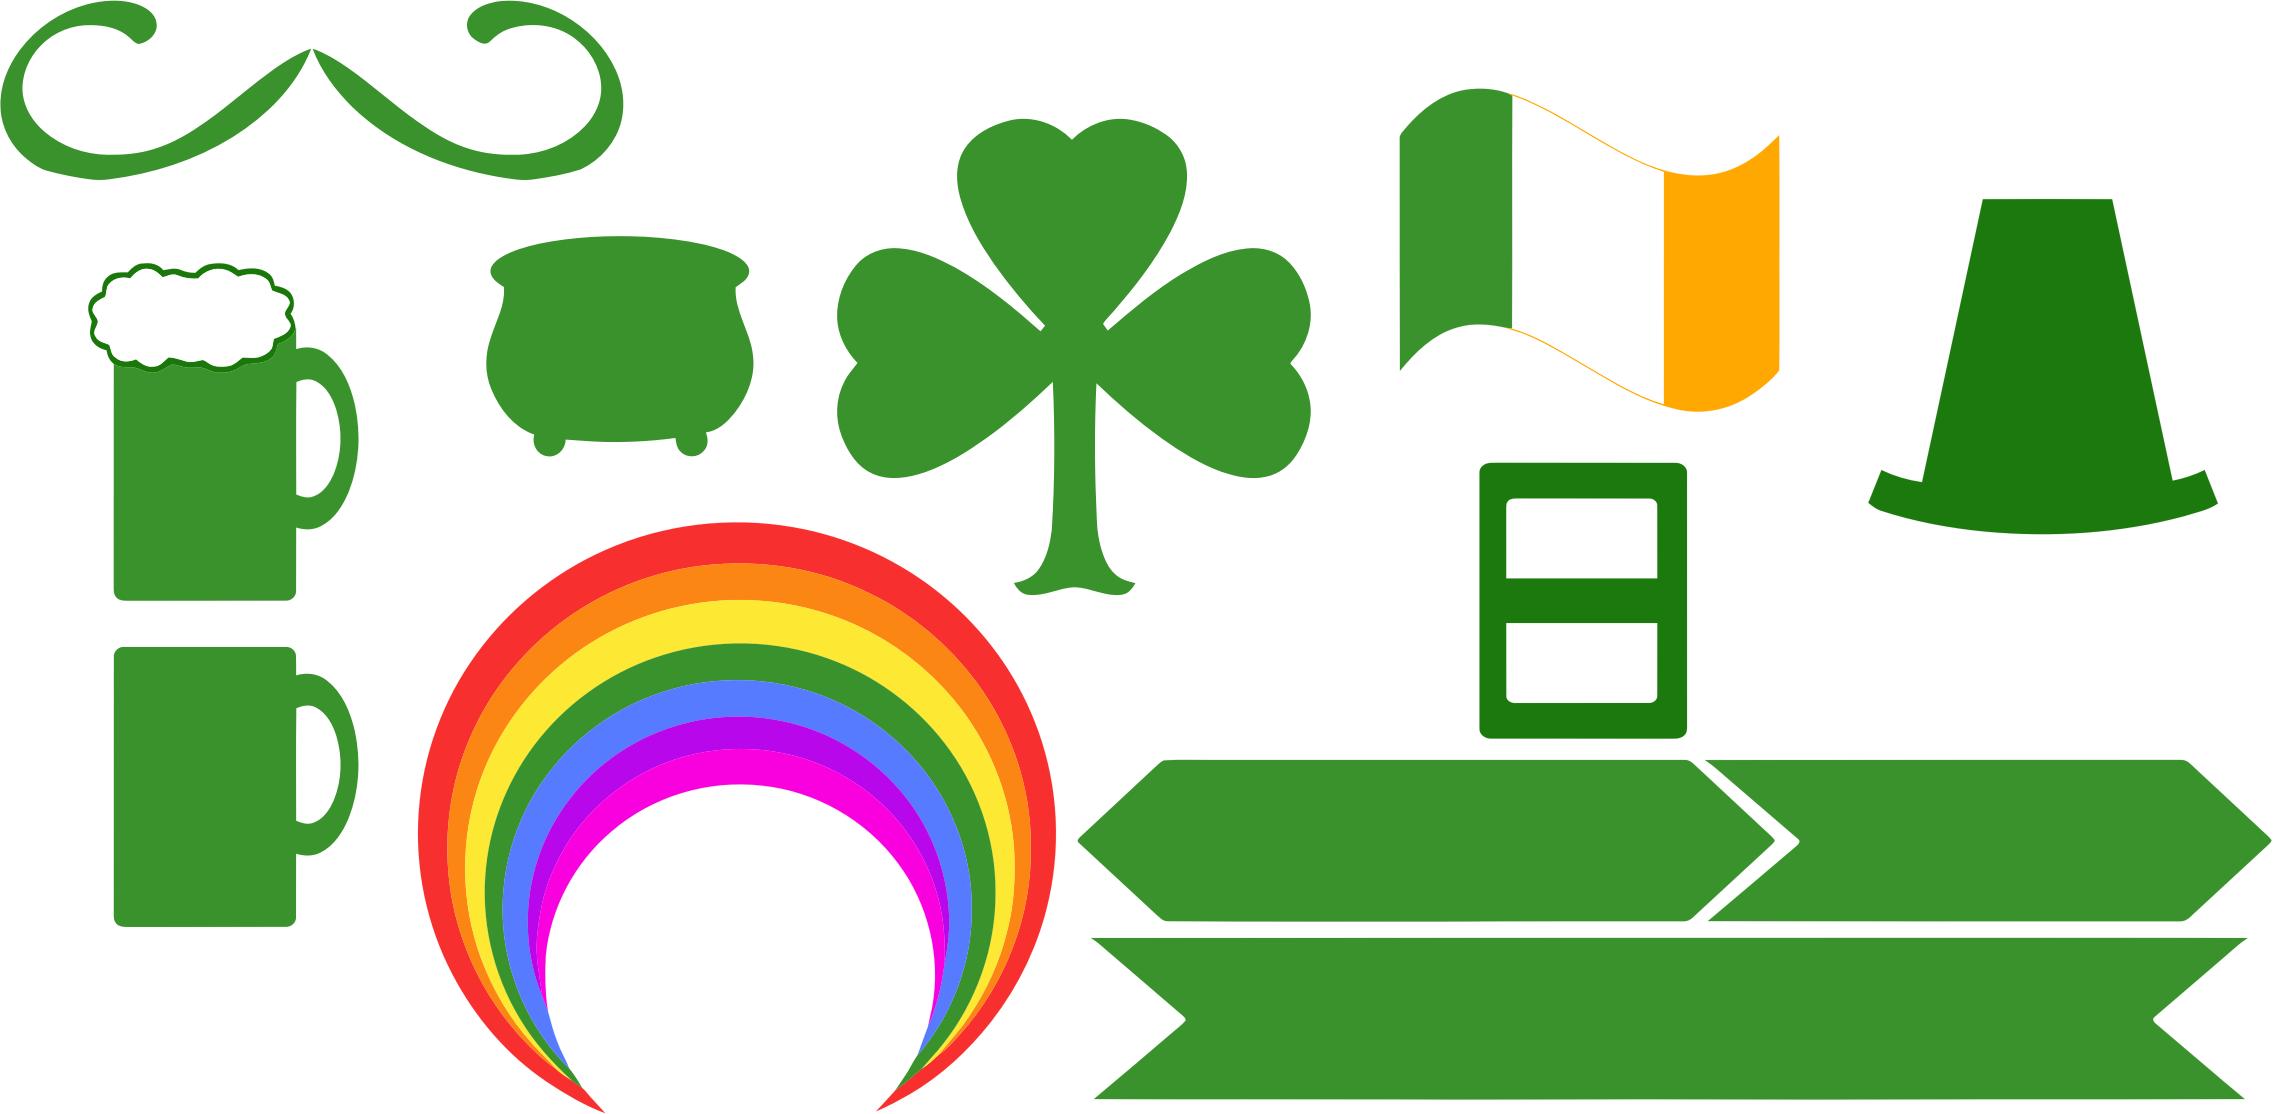 Saint Patrick's Day Paraphernalia icons